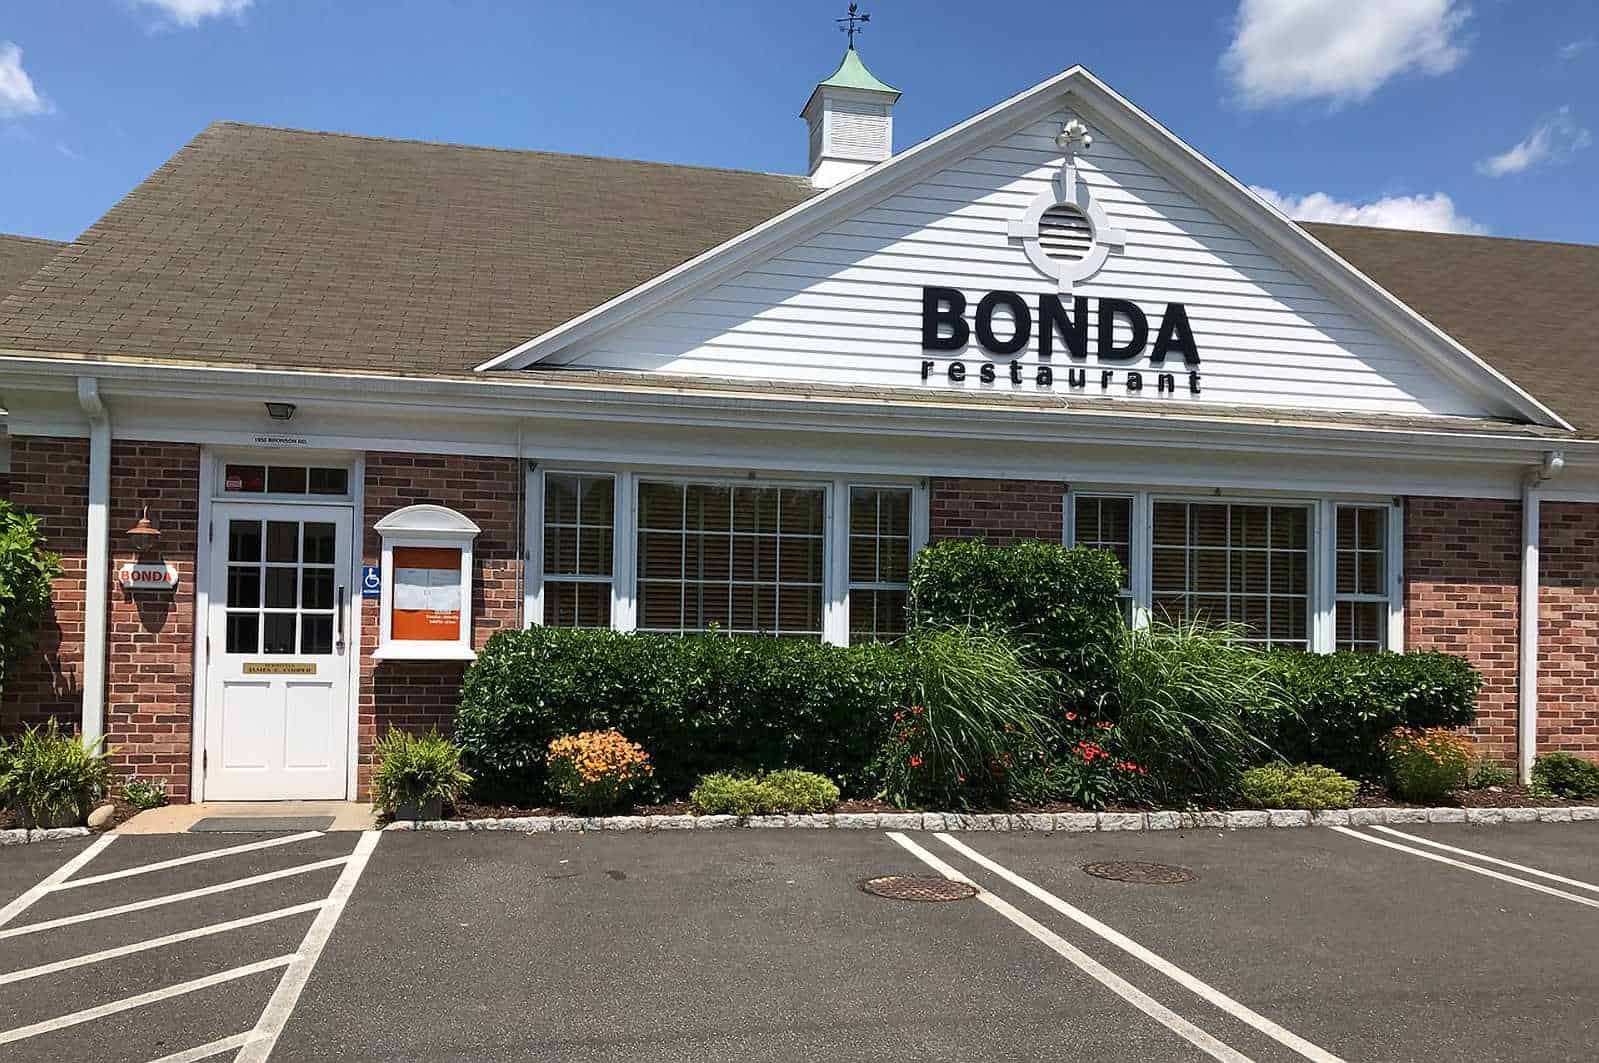 BONDA Restaurant Best Restaurants in Fairfield, CT